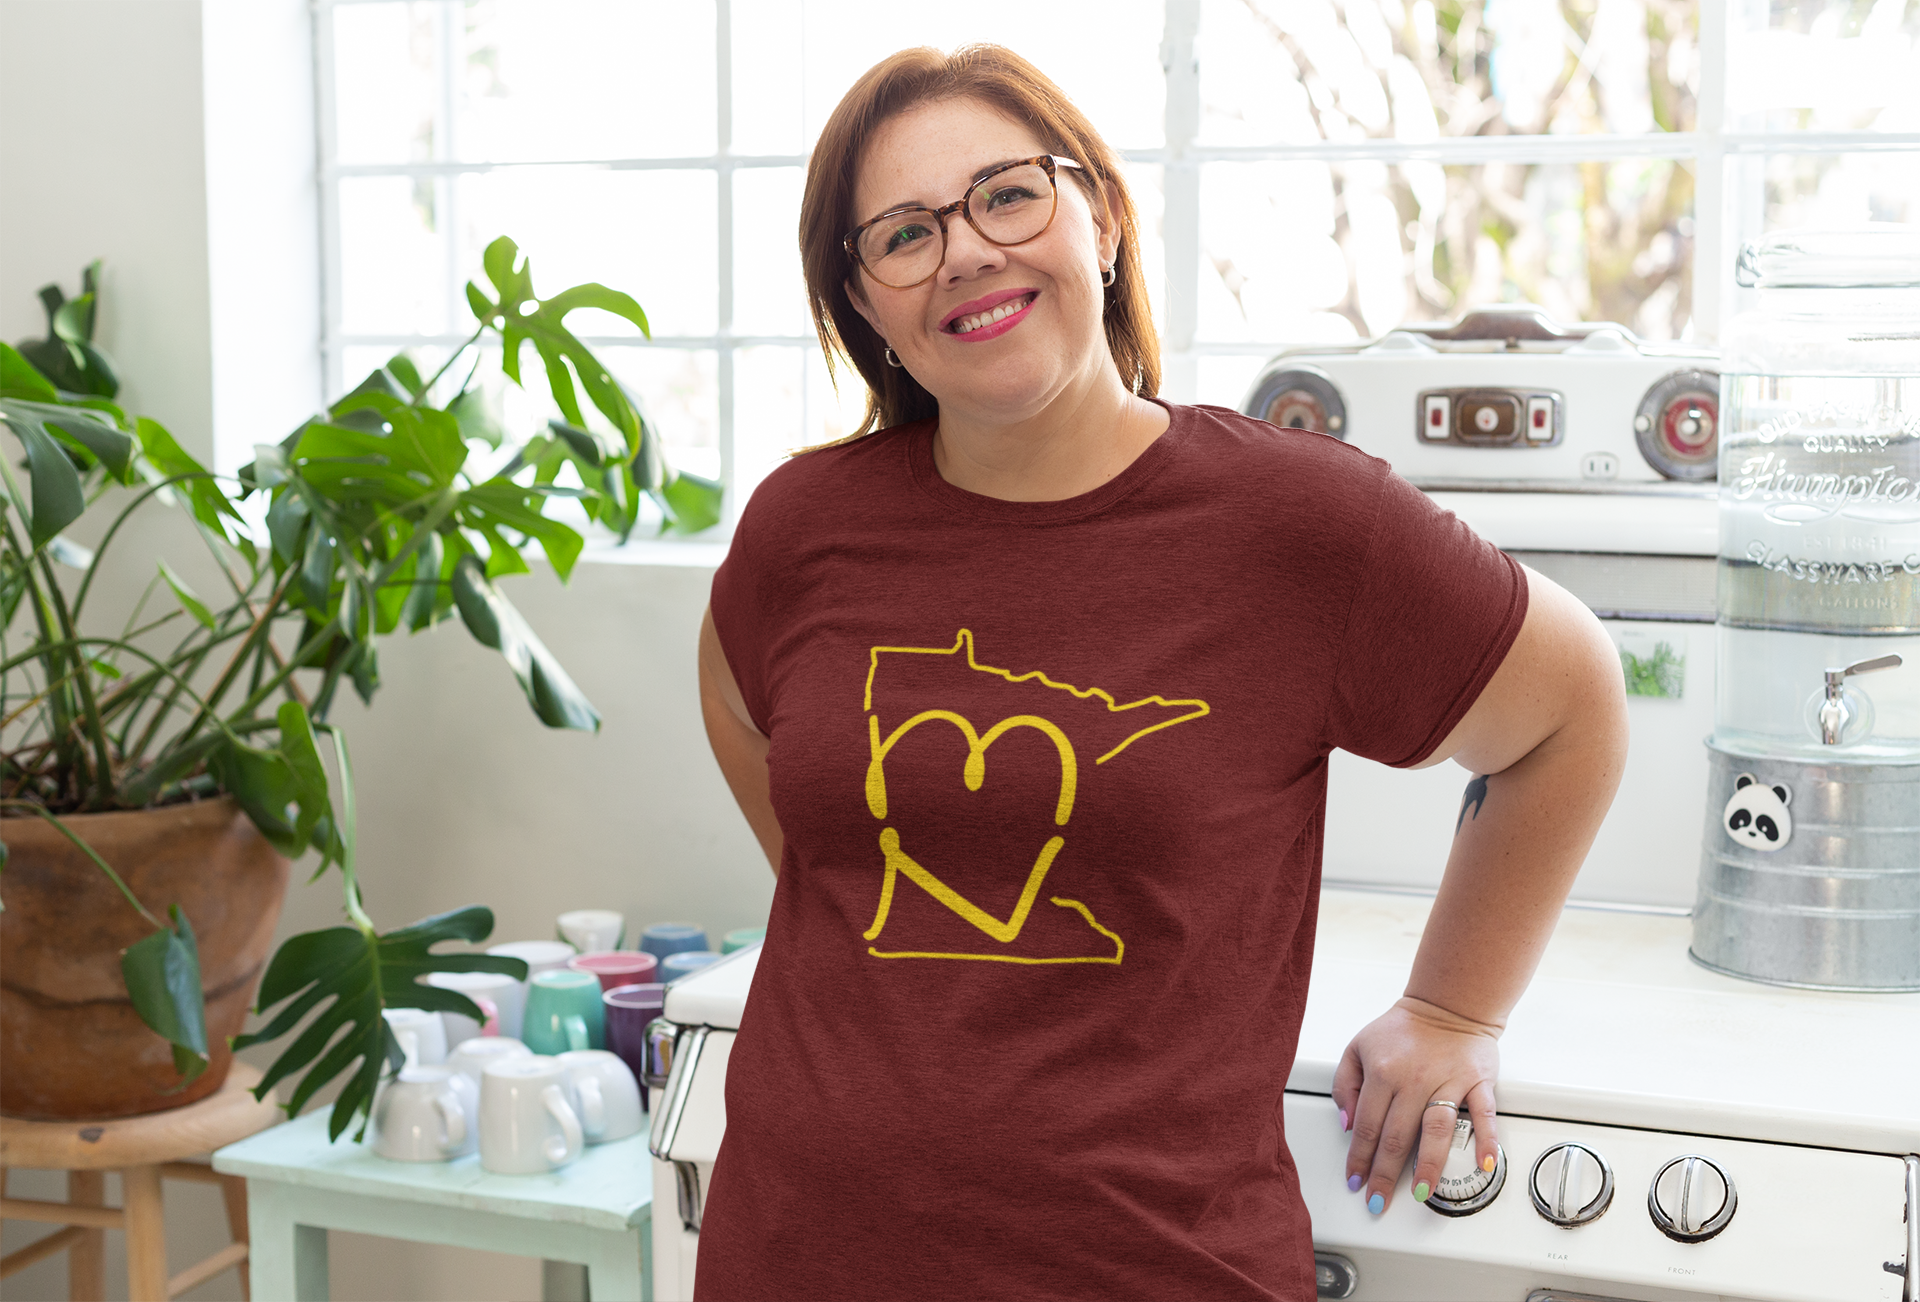 MN Love (Minnesota) T-Shirt - Heather Maroon & Gold